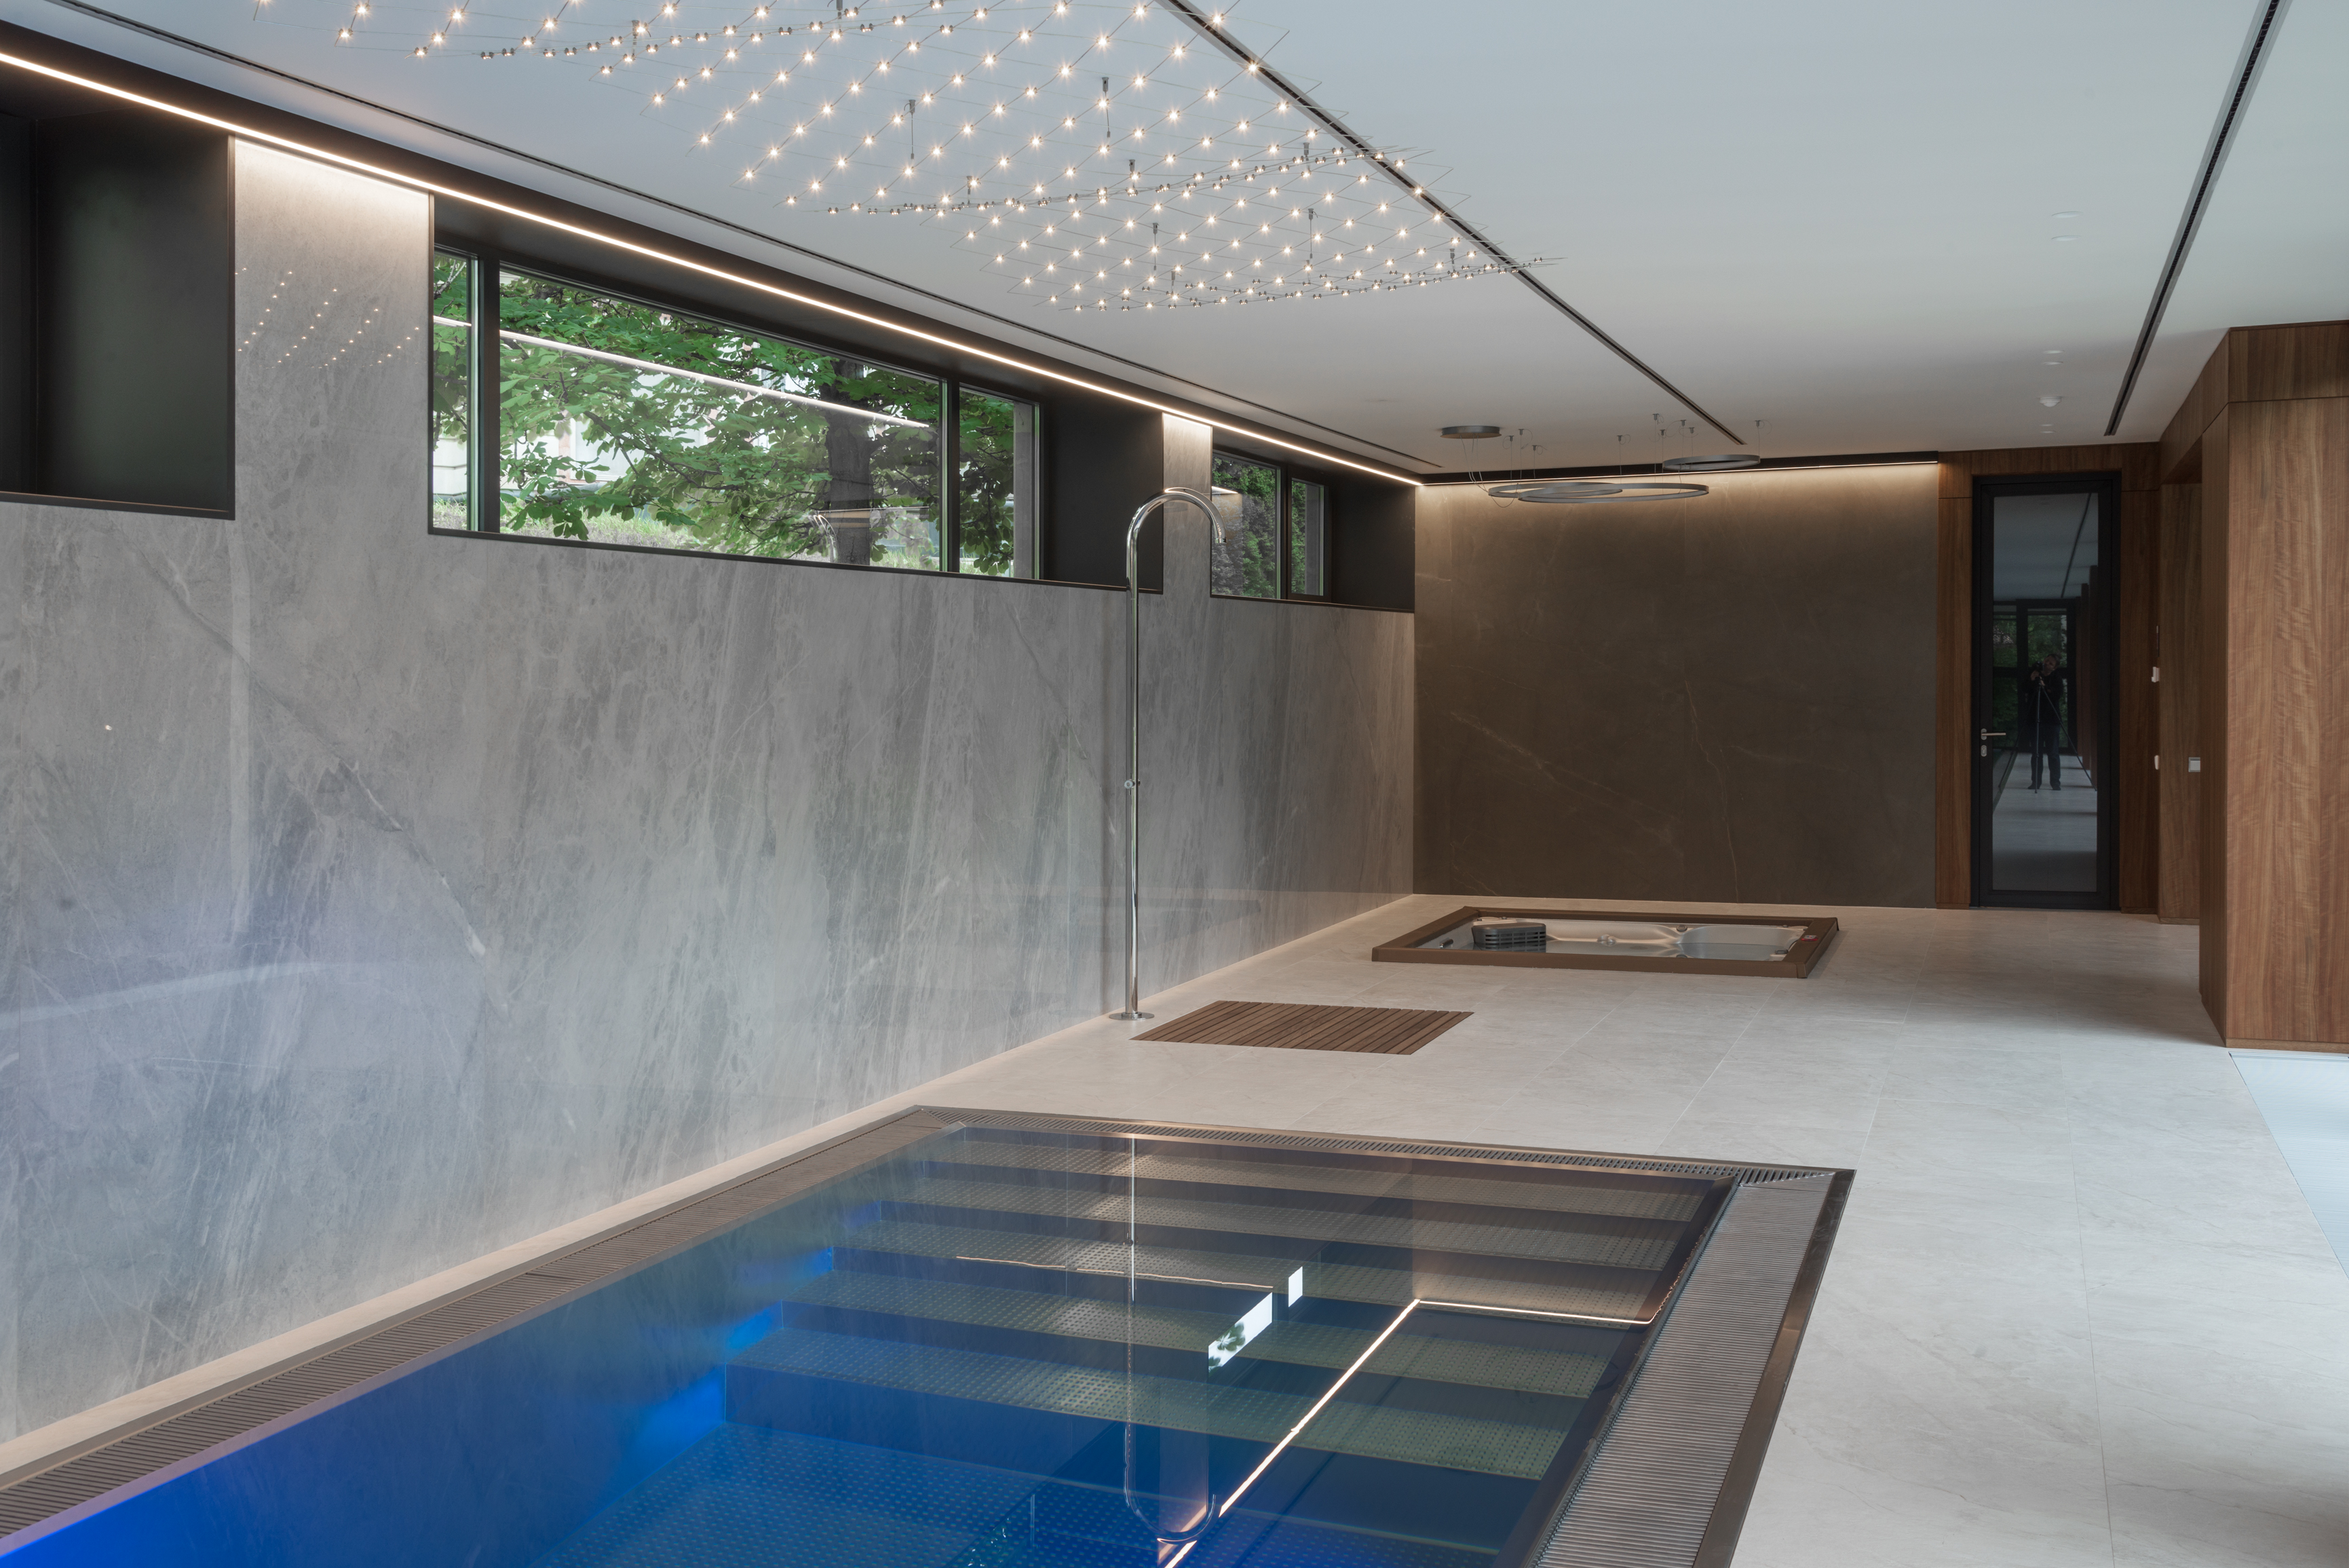 Design interior private wellness with decklevel pool IMAGINOX